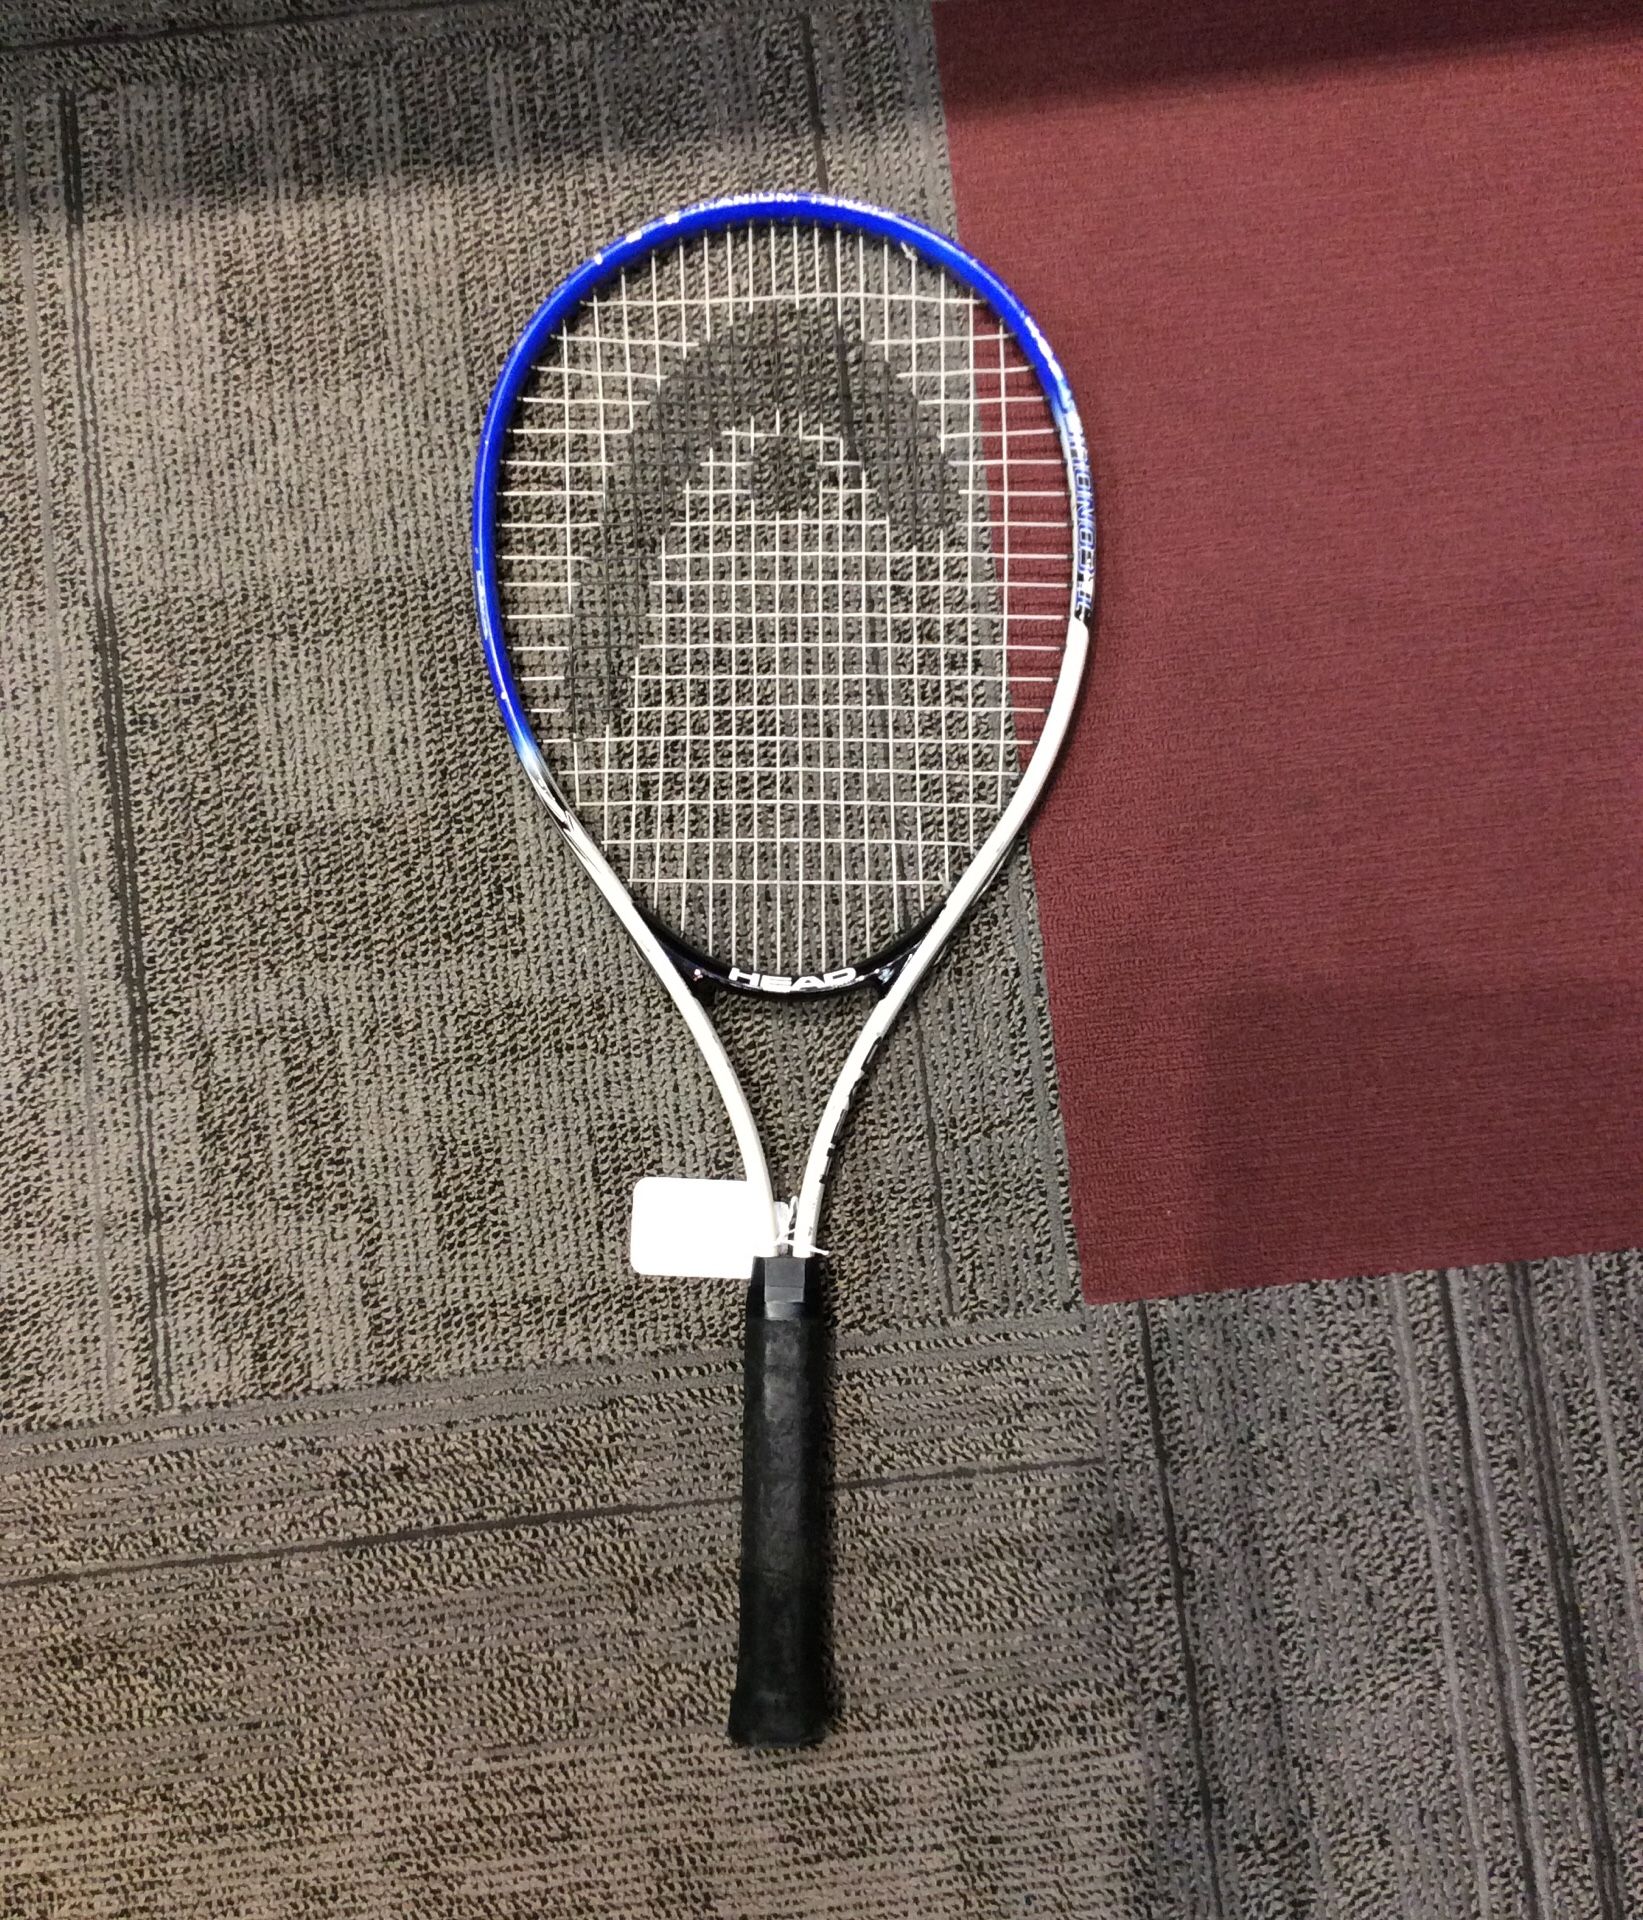 TI conquest tennis racket